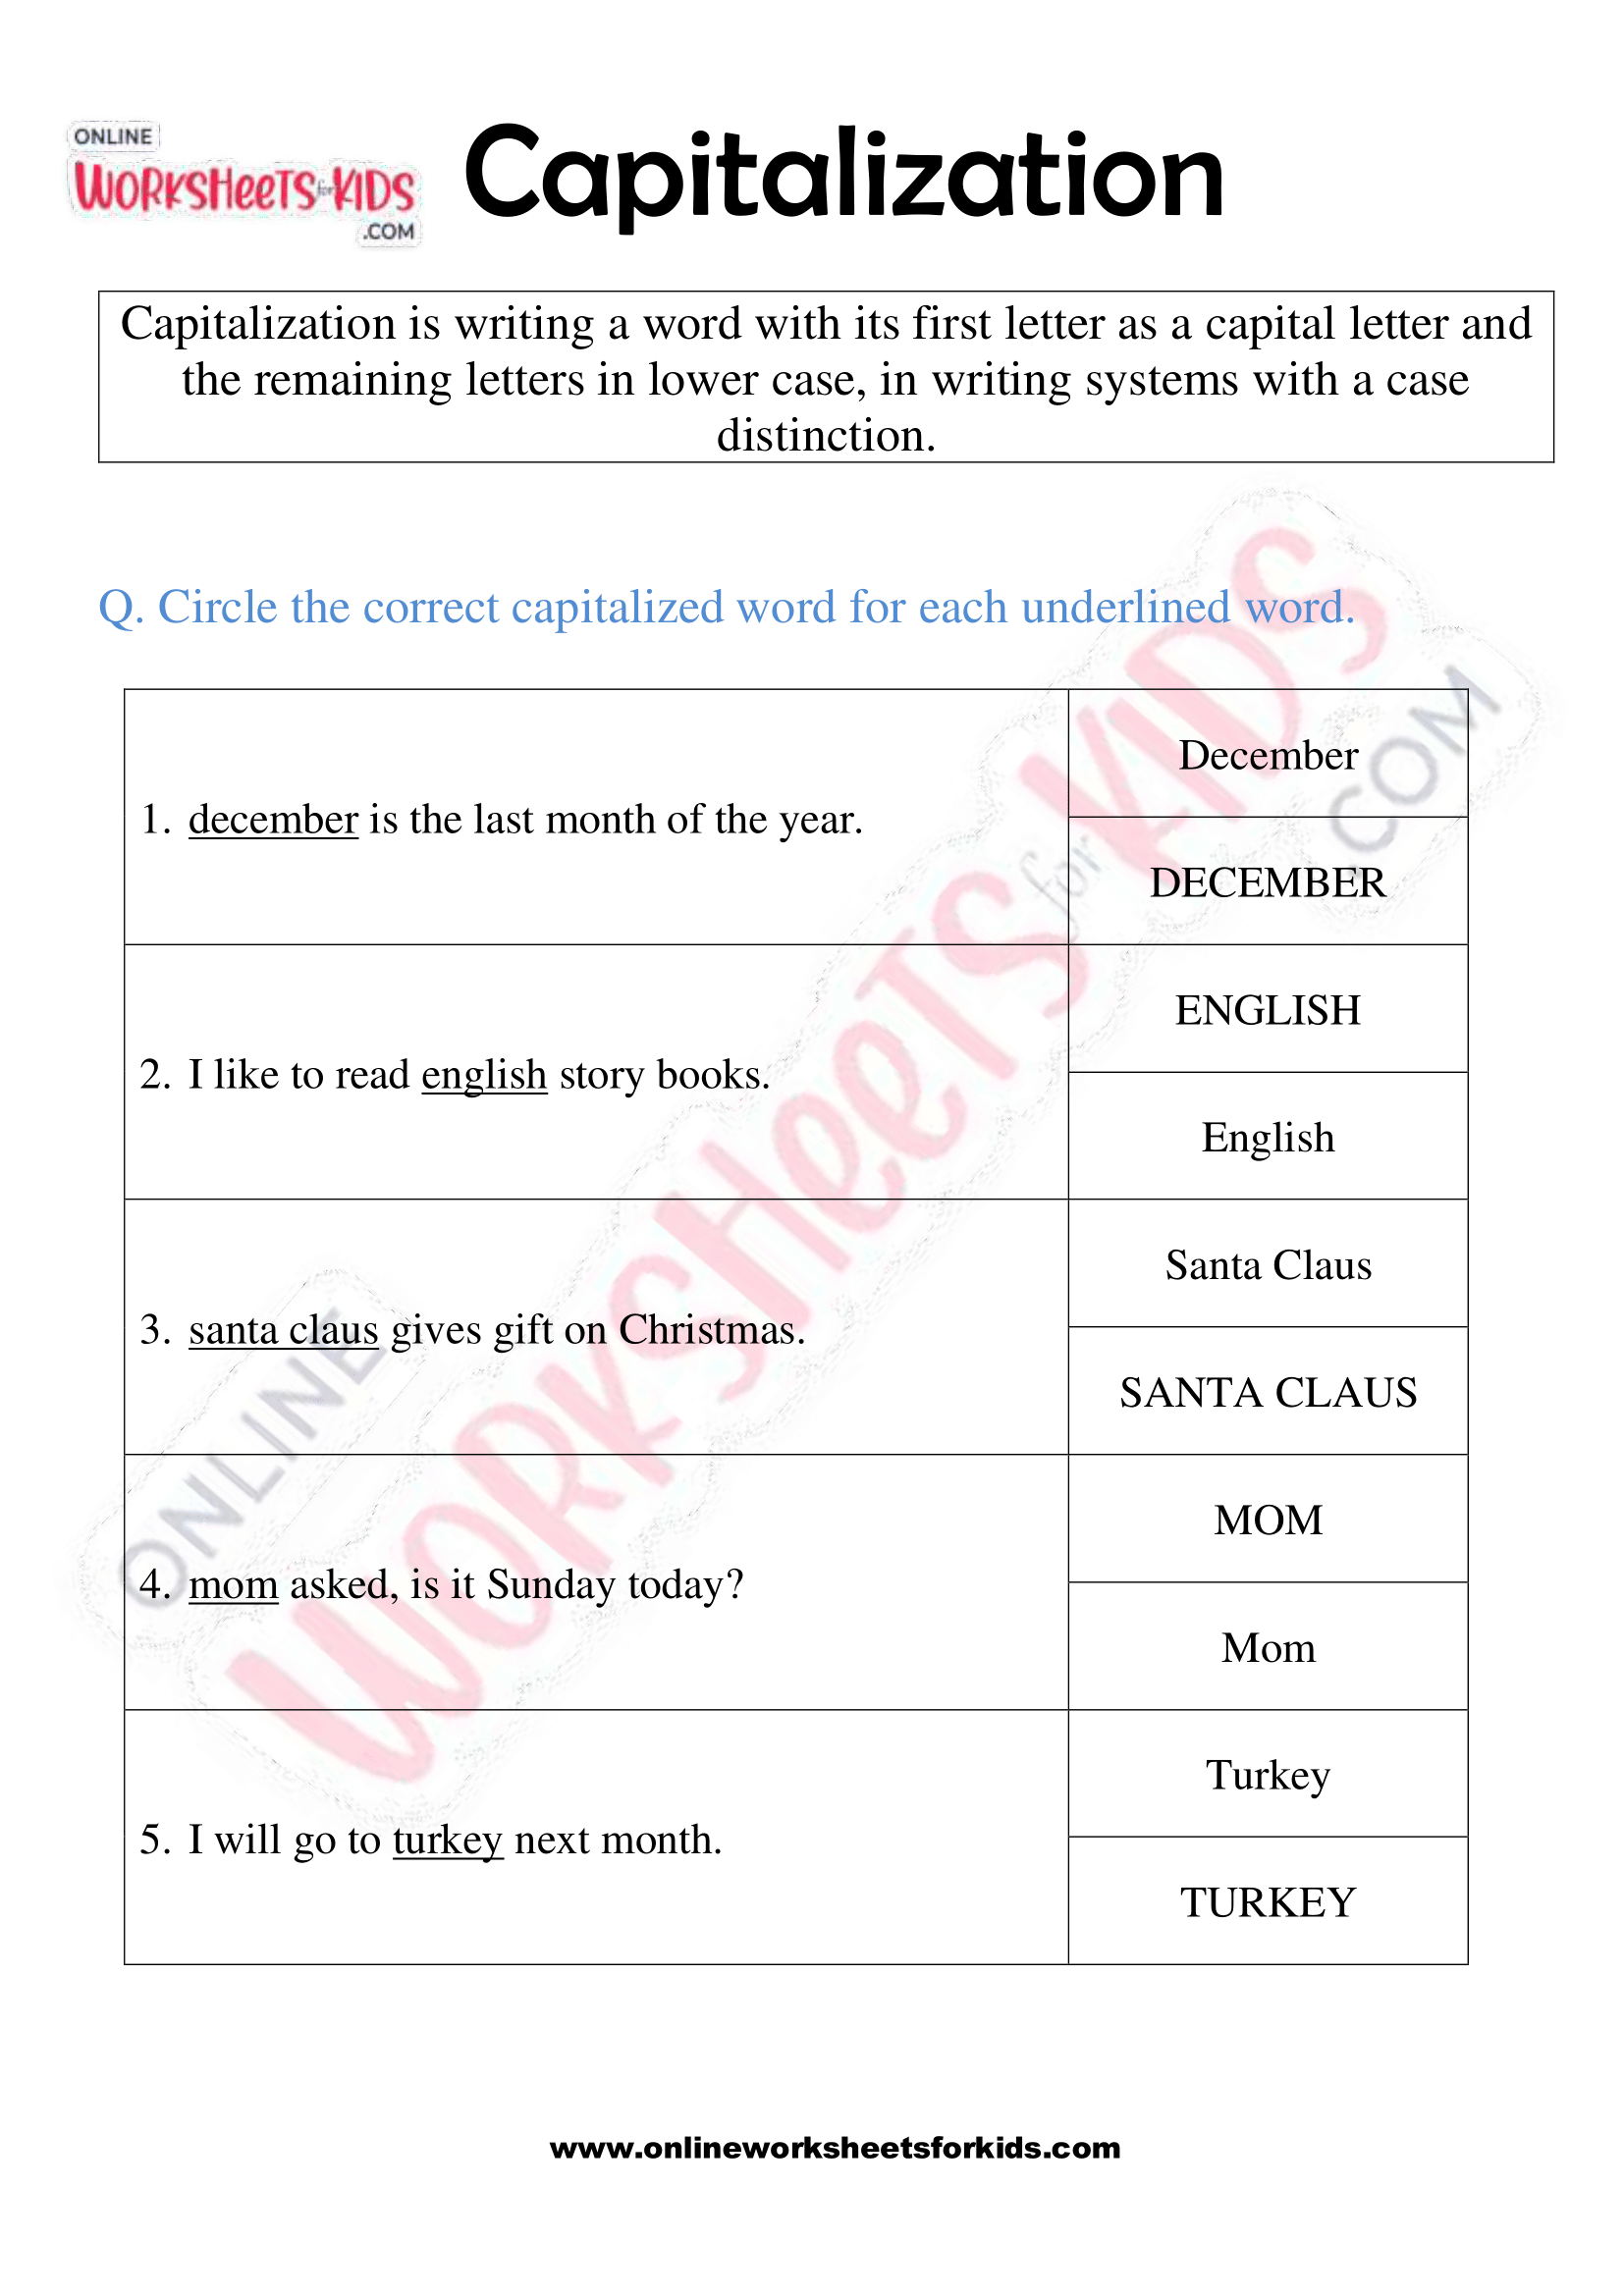 Capitalization Worksheet 10 for Kids